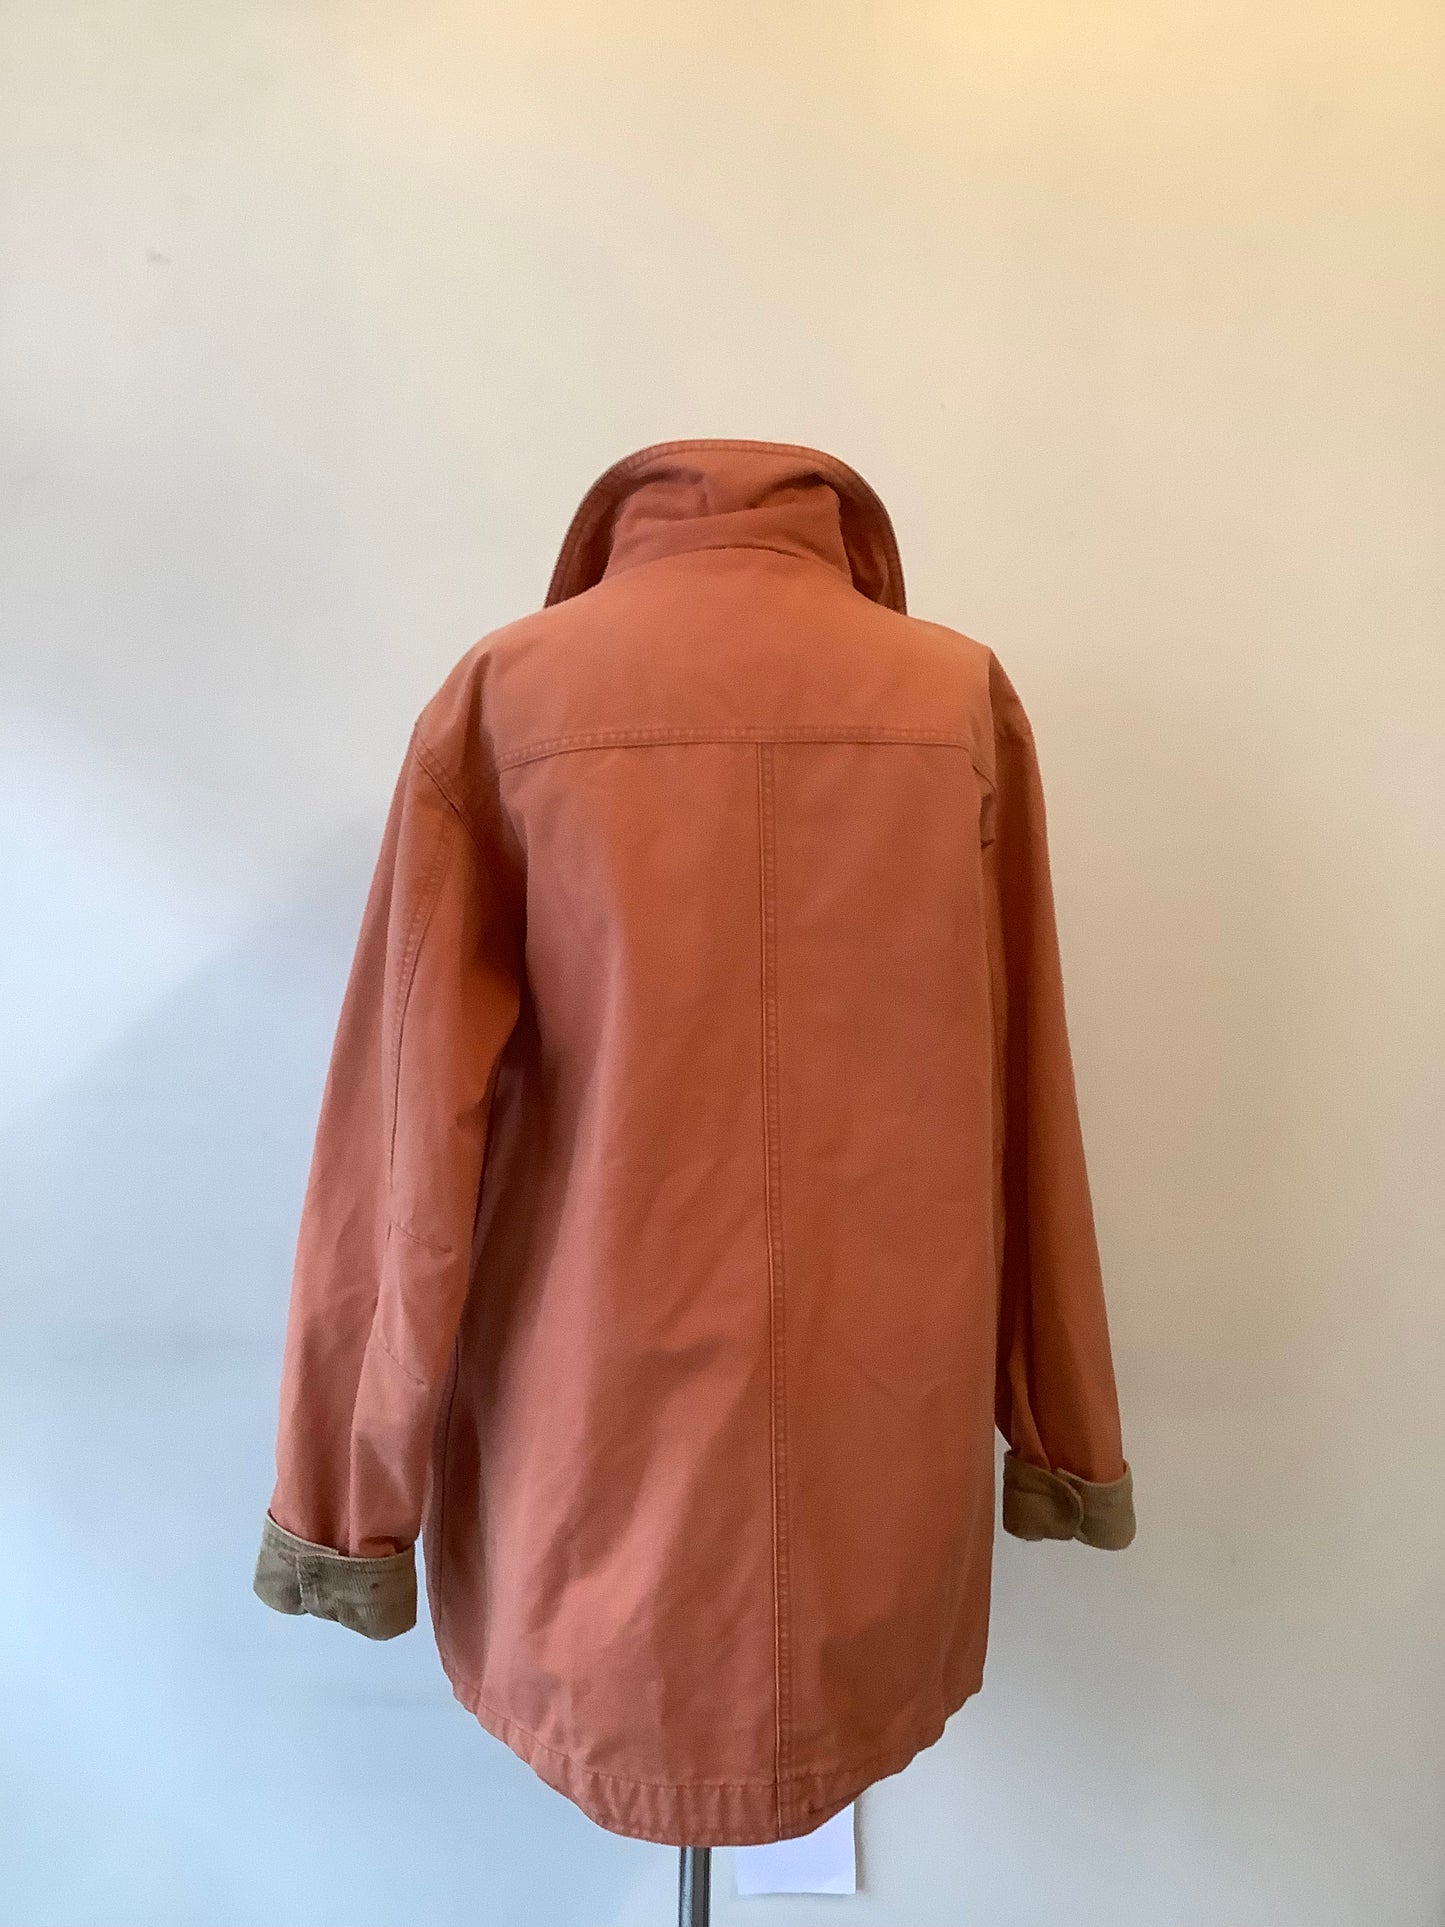 Orange Canvas LL Bean chore coat